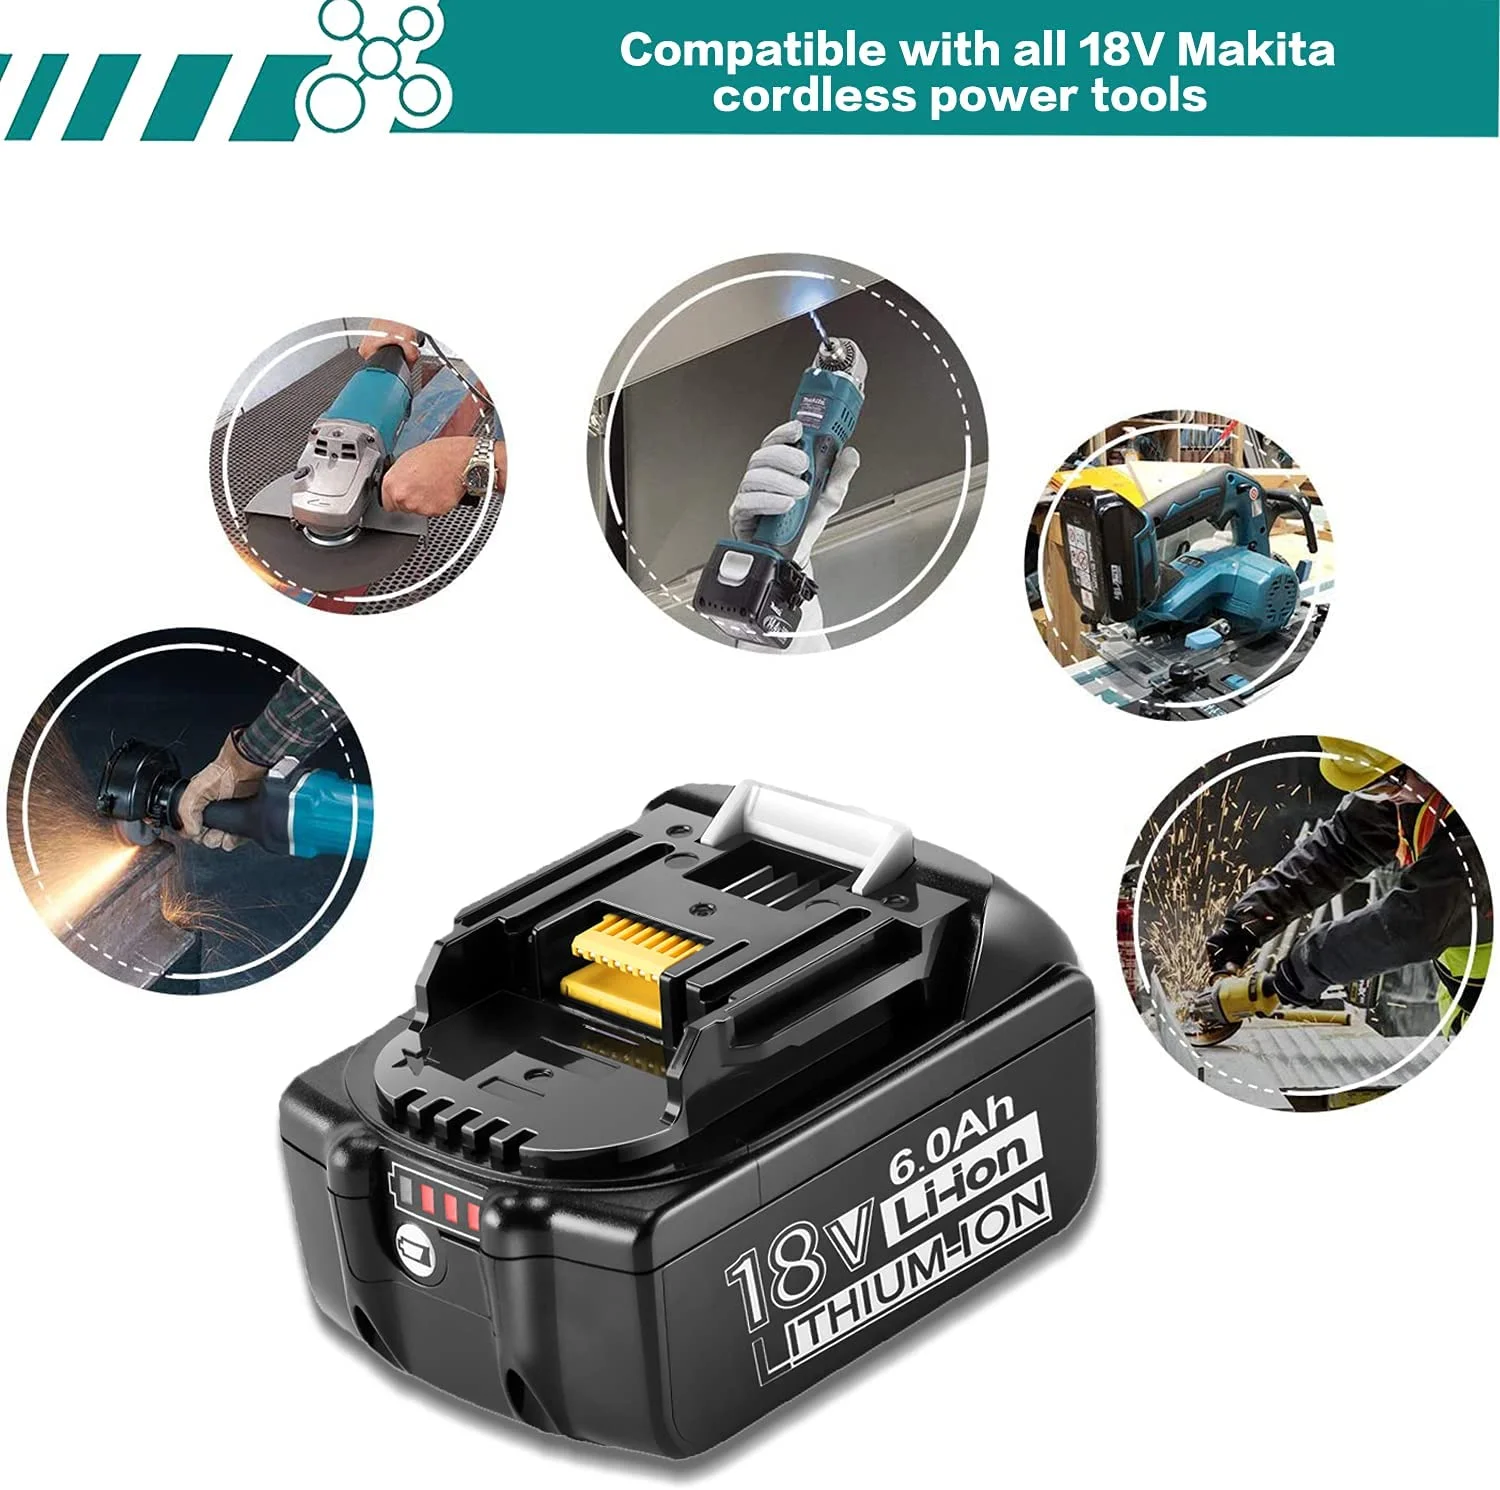 100% Original Für Makita 18V 6000mAh Aufladbare Power Werkzeuge Batterie mit LED Li-Ion Ersatz LXT BL1860B BL1860 BL1850